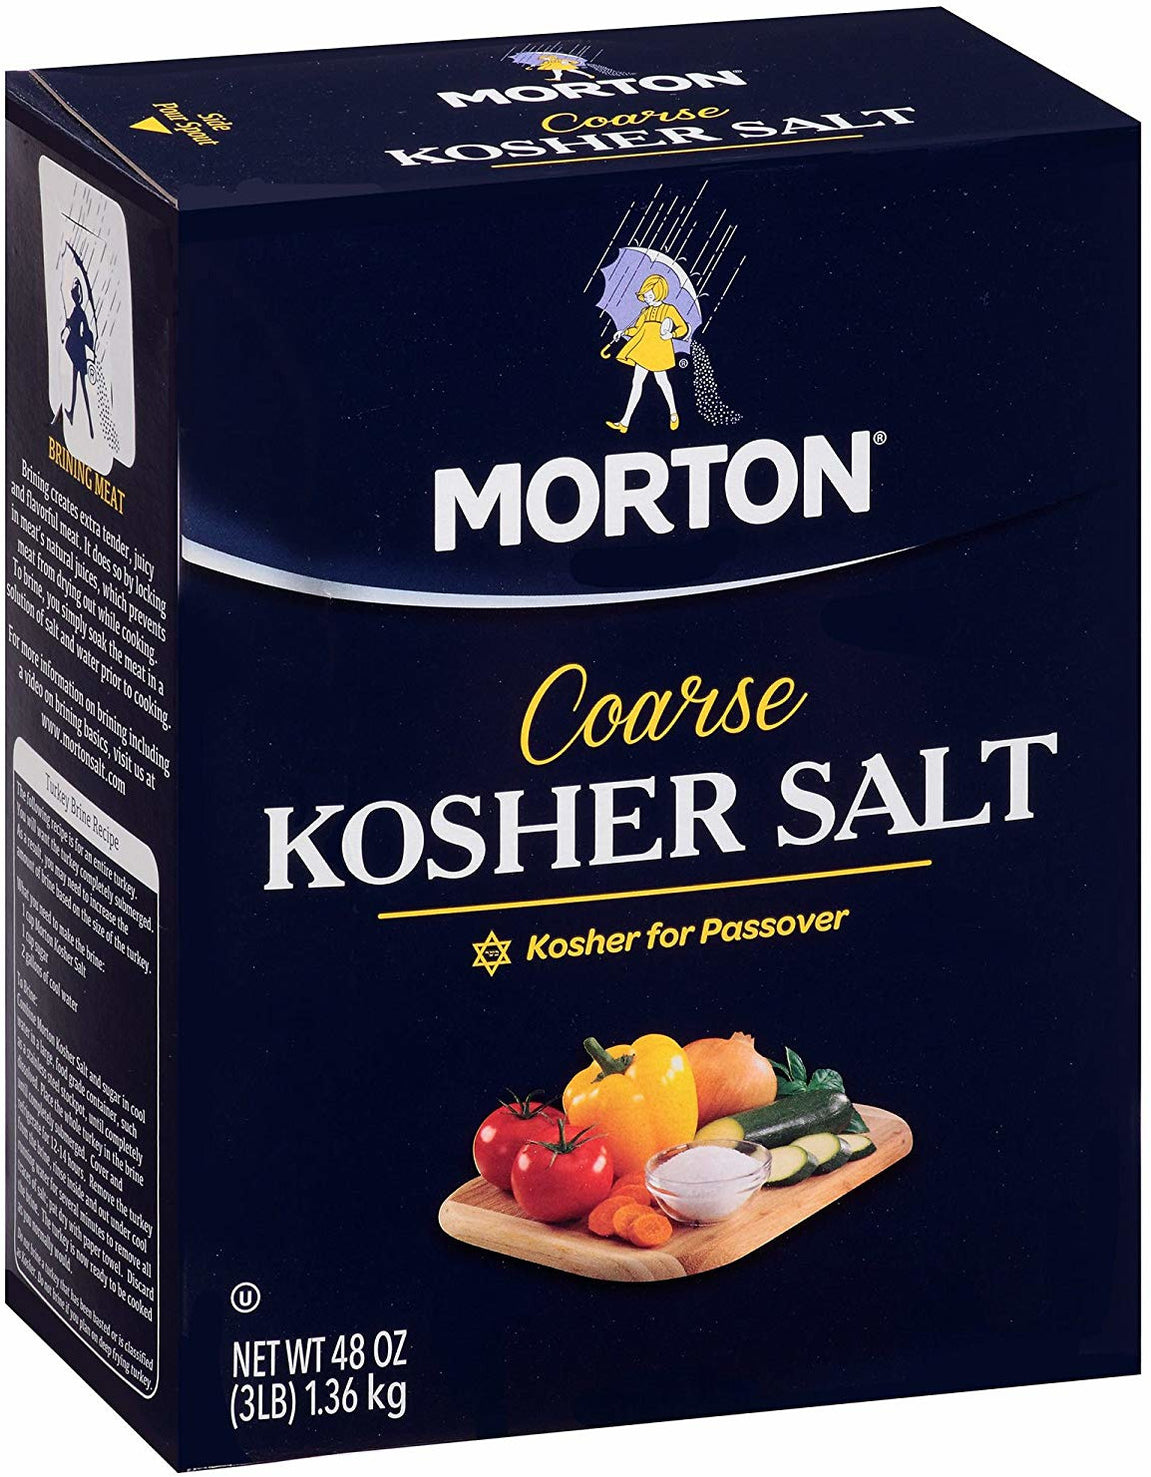 Morton Kosher Salt 3 Lbs Goisco